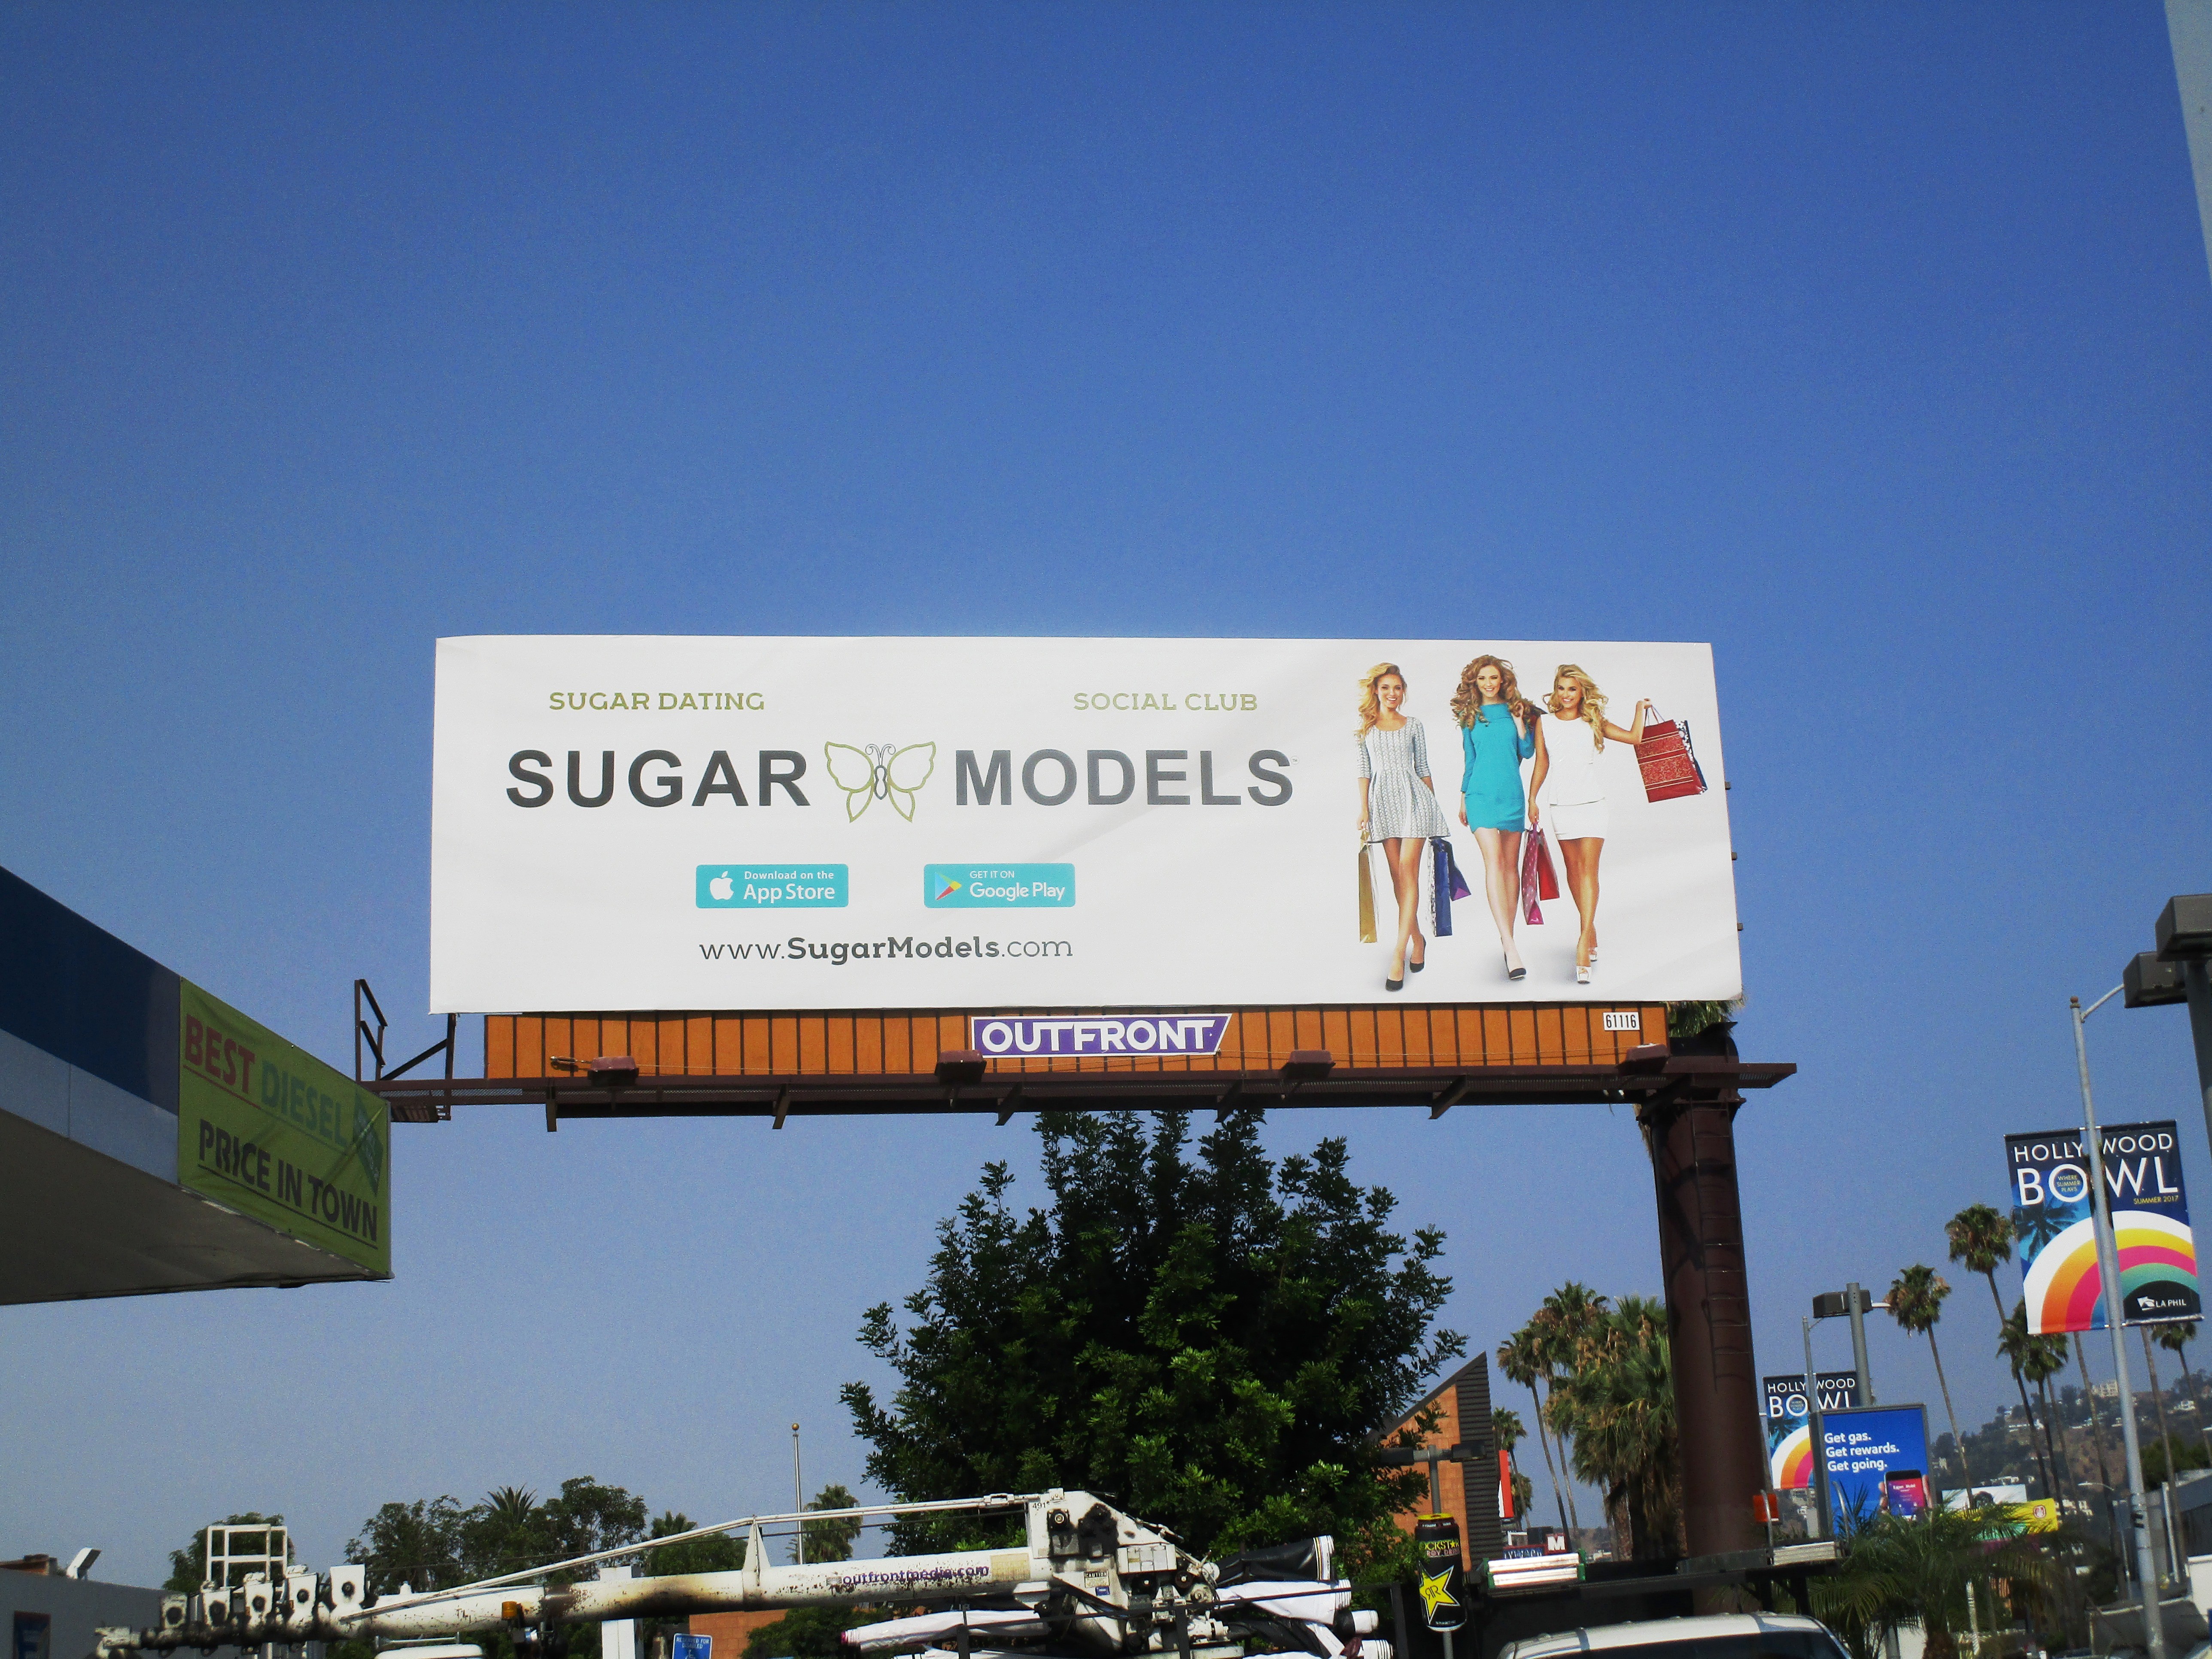 sugarmodels - billboard